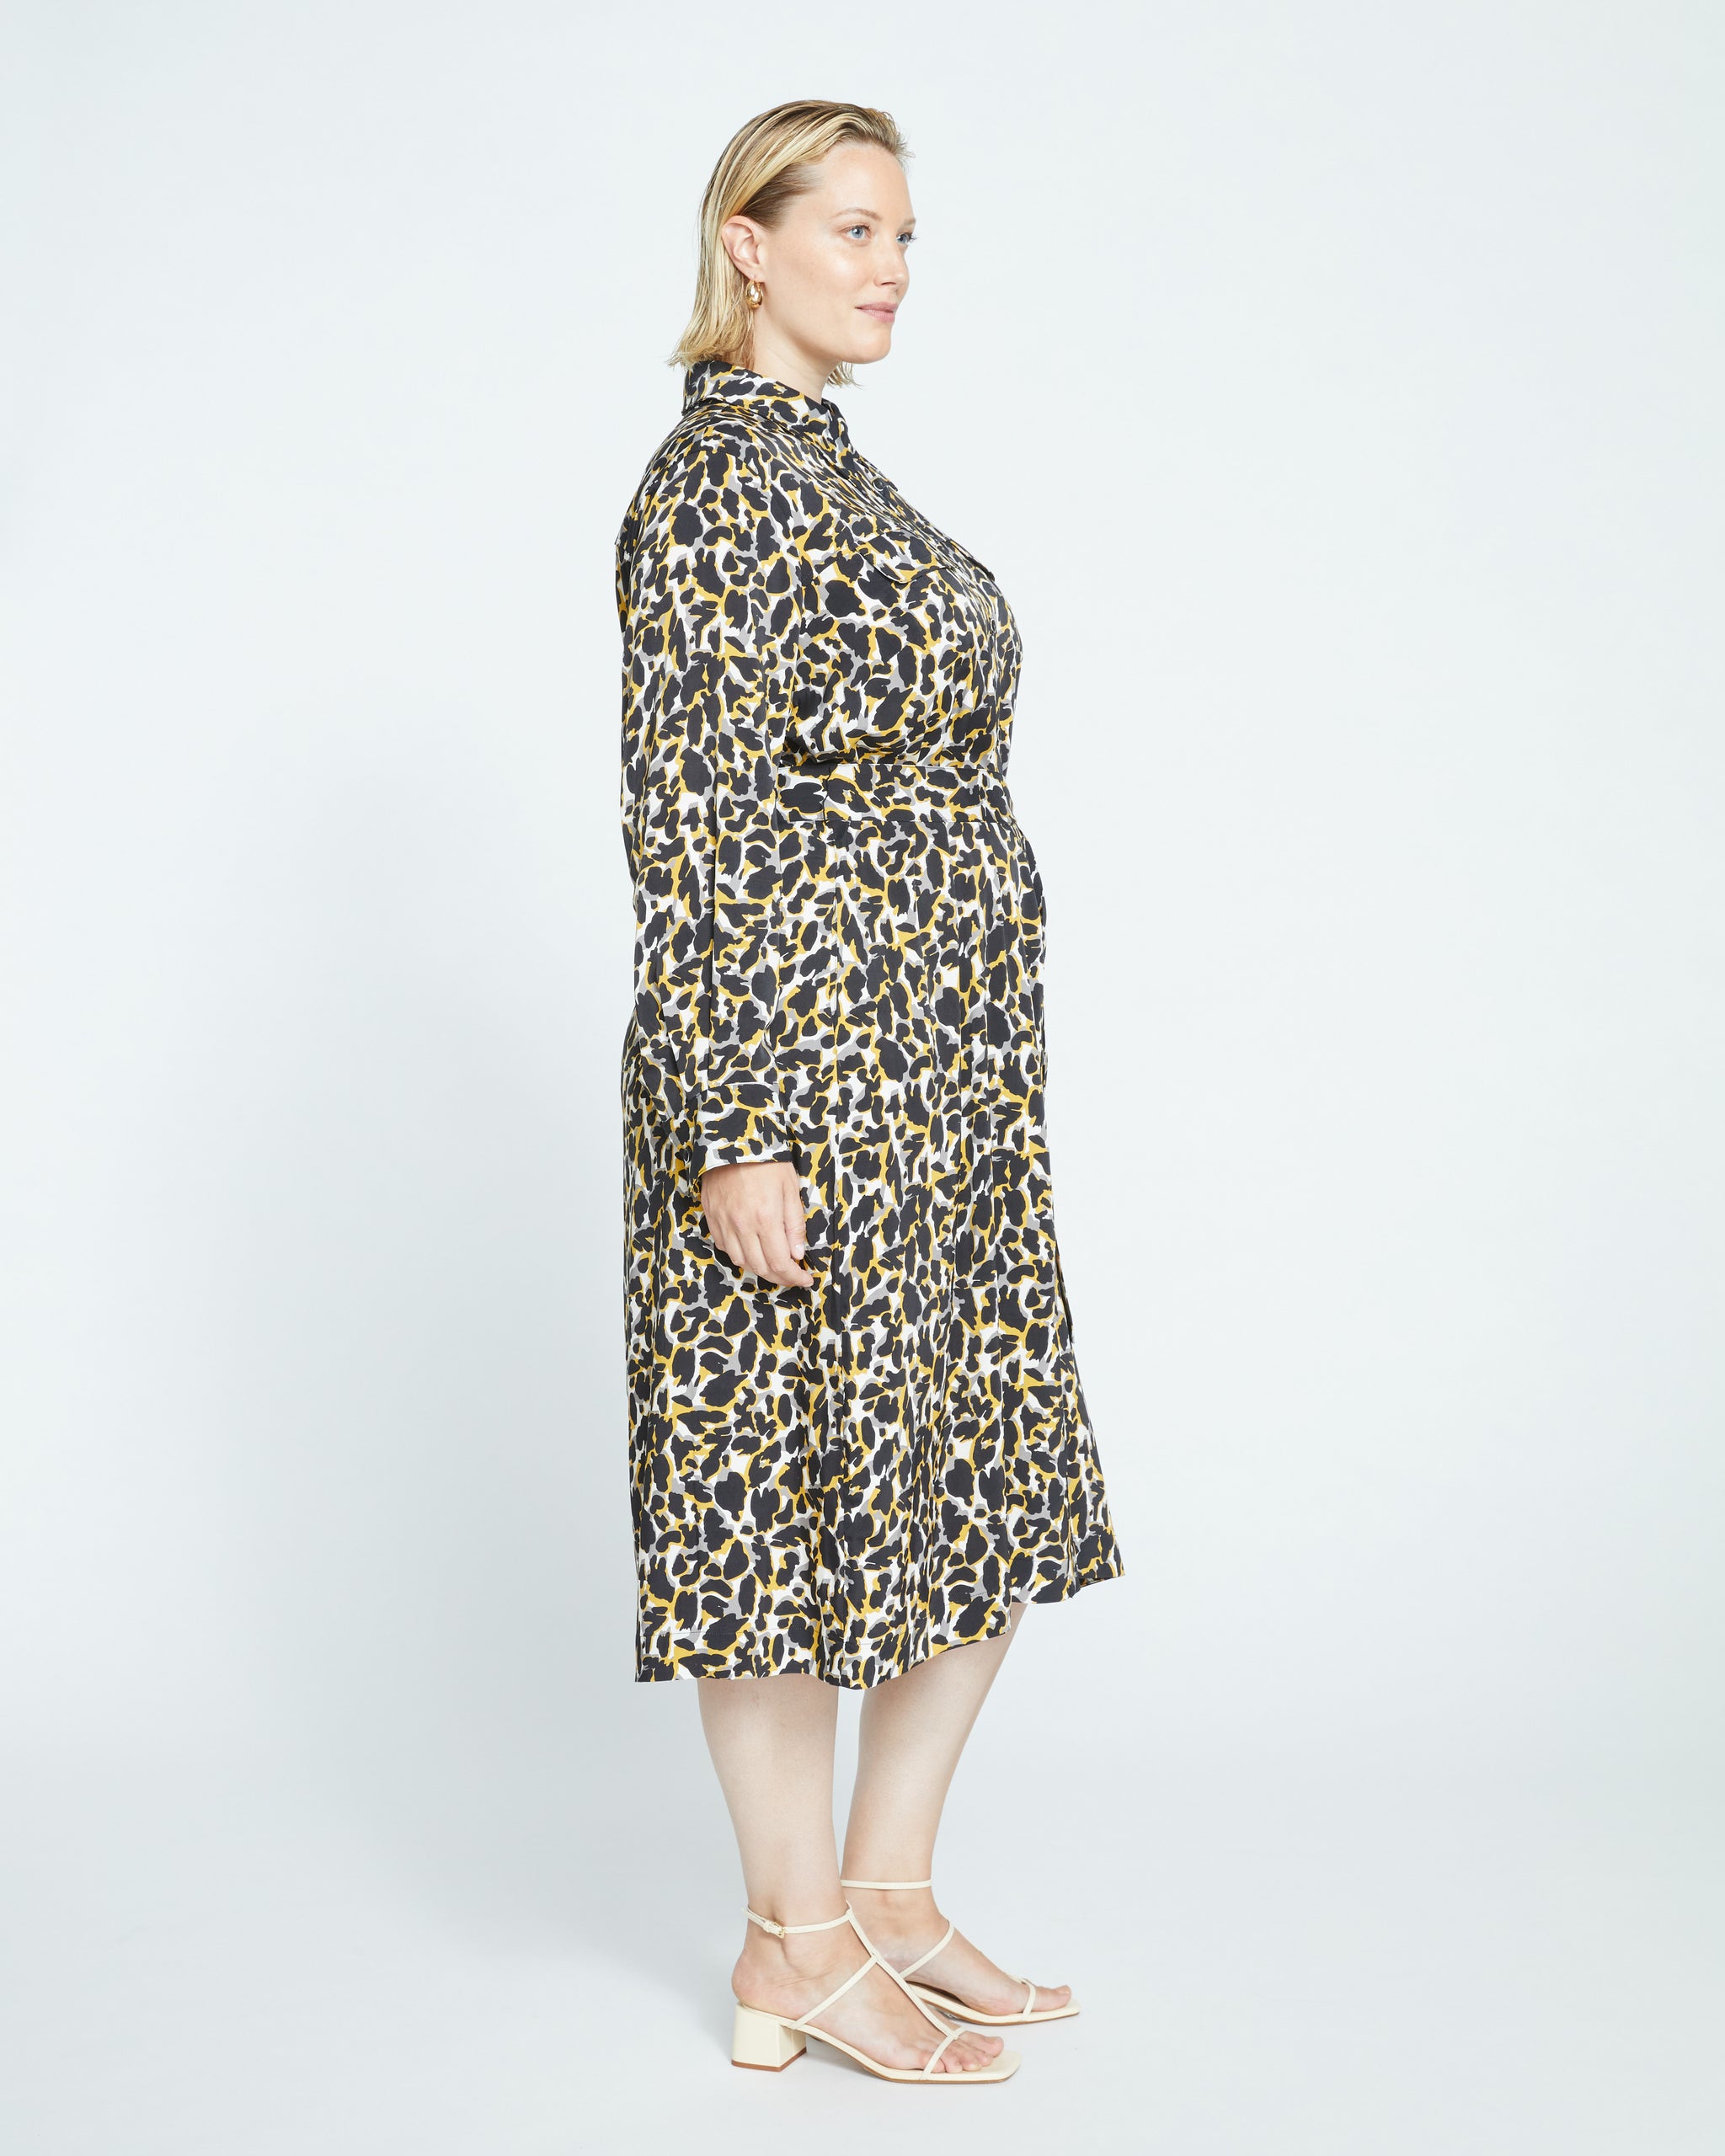 Cooling Stretch Cupro Savannah Dress - Leopard | Universal Standard